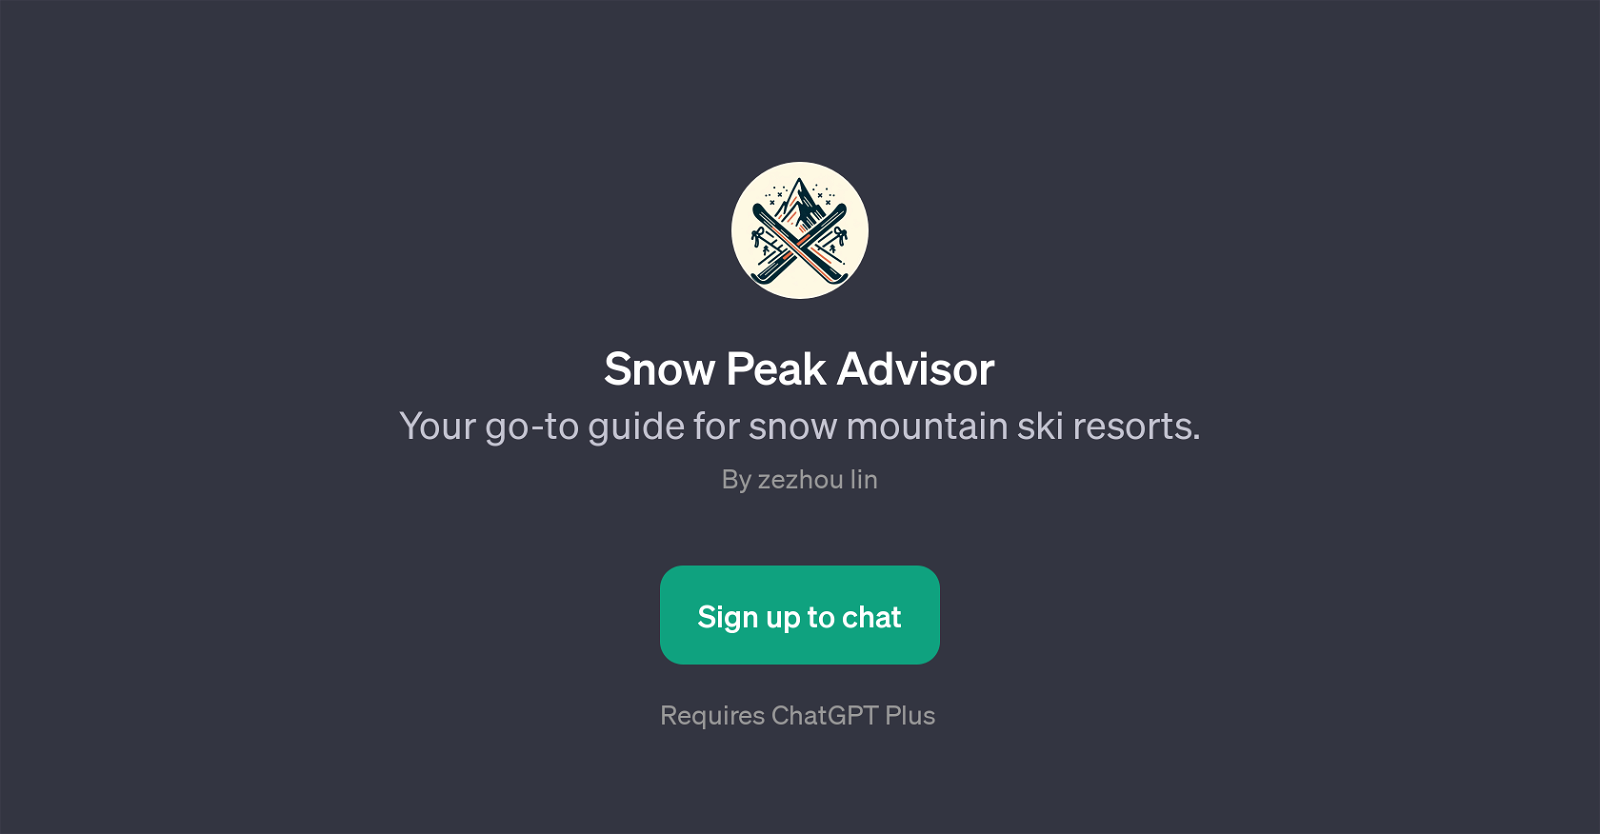 Snow Peak Advisor website